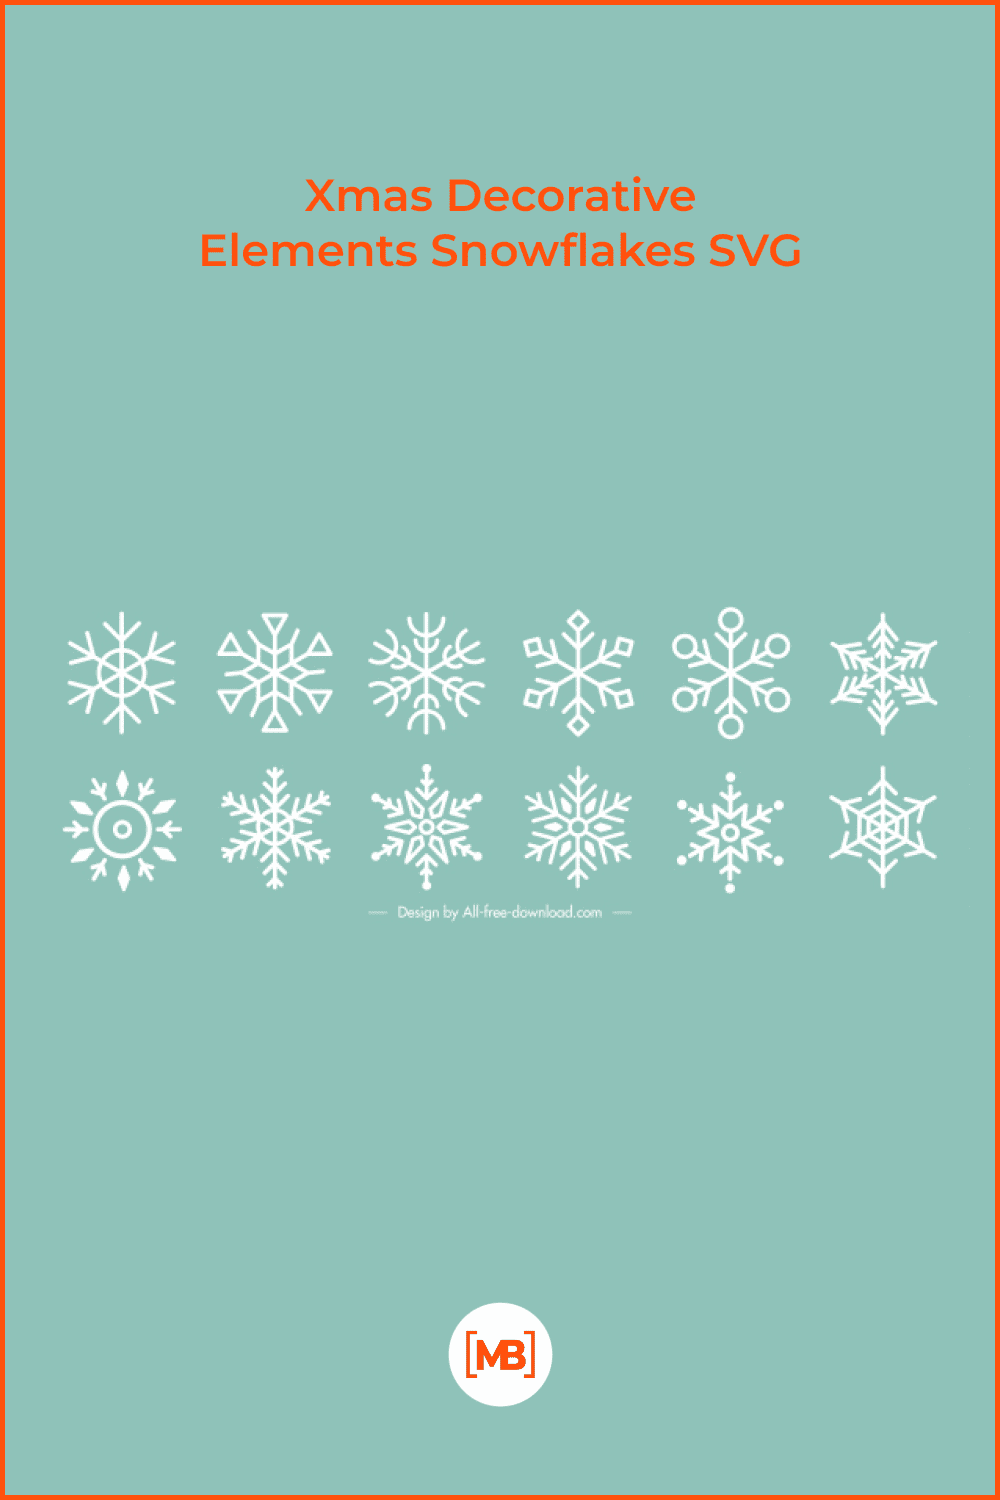 Xmas Decorative Elements Snowflakes SVG.